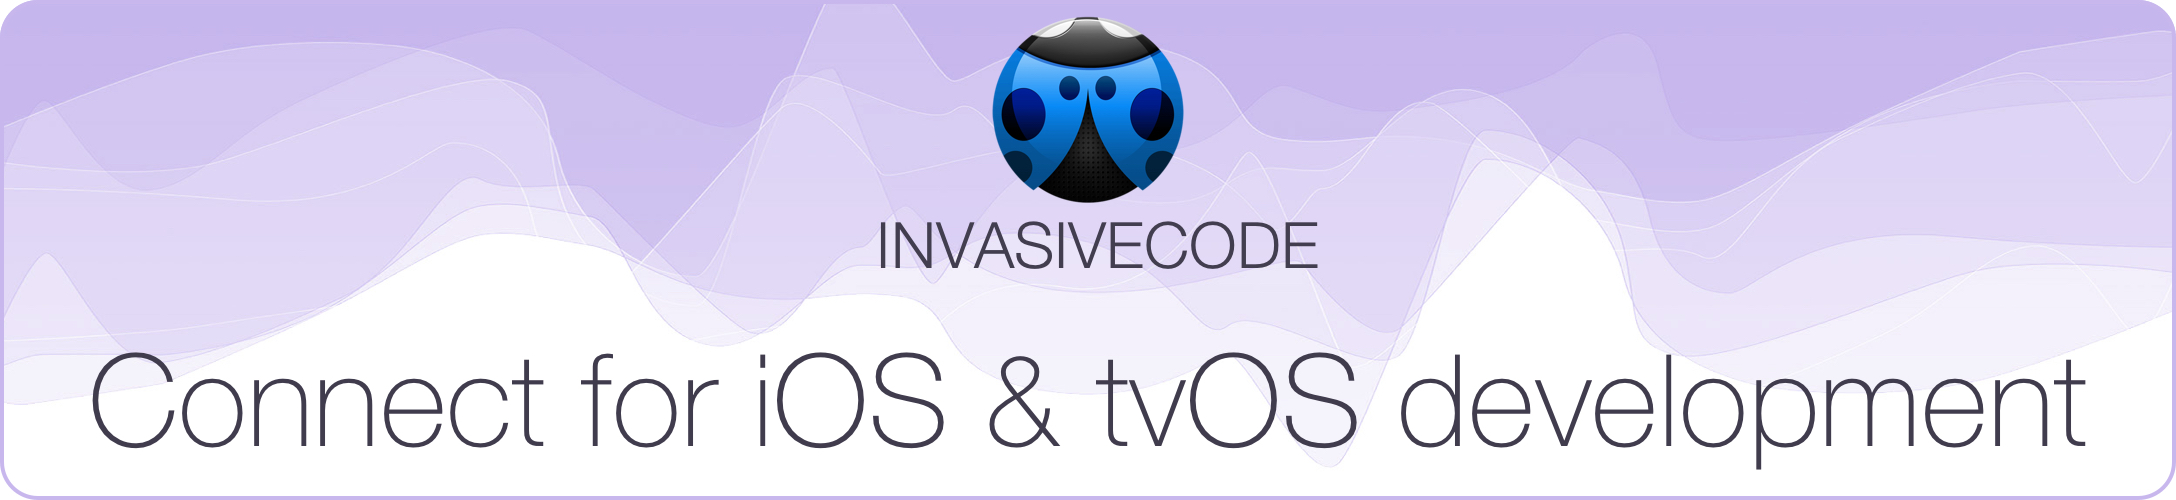 iOS Consulting | INVASIVECODE